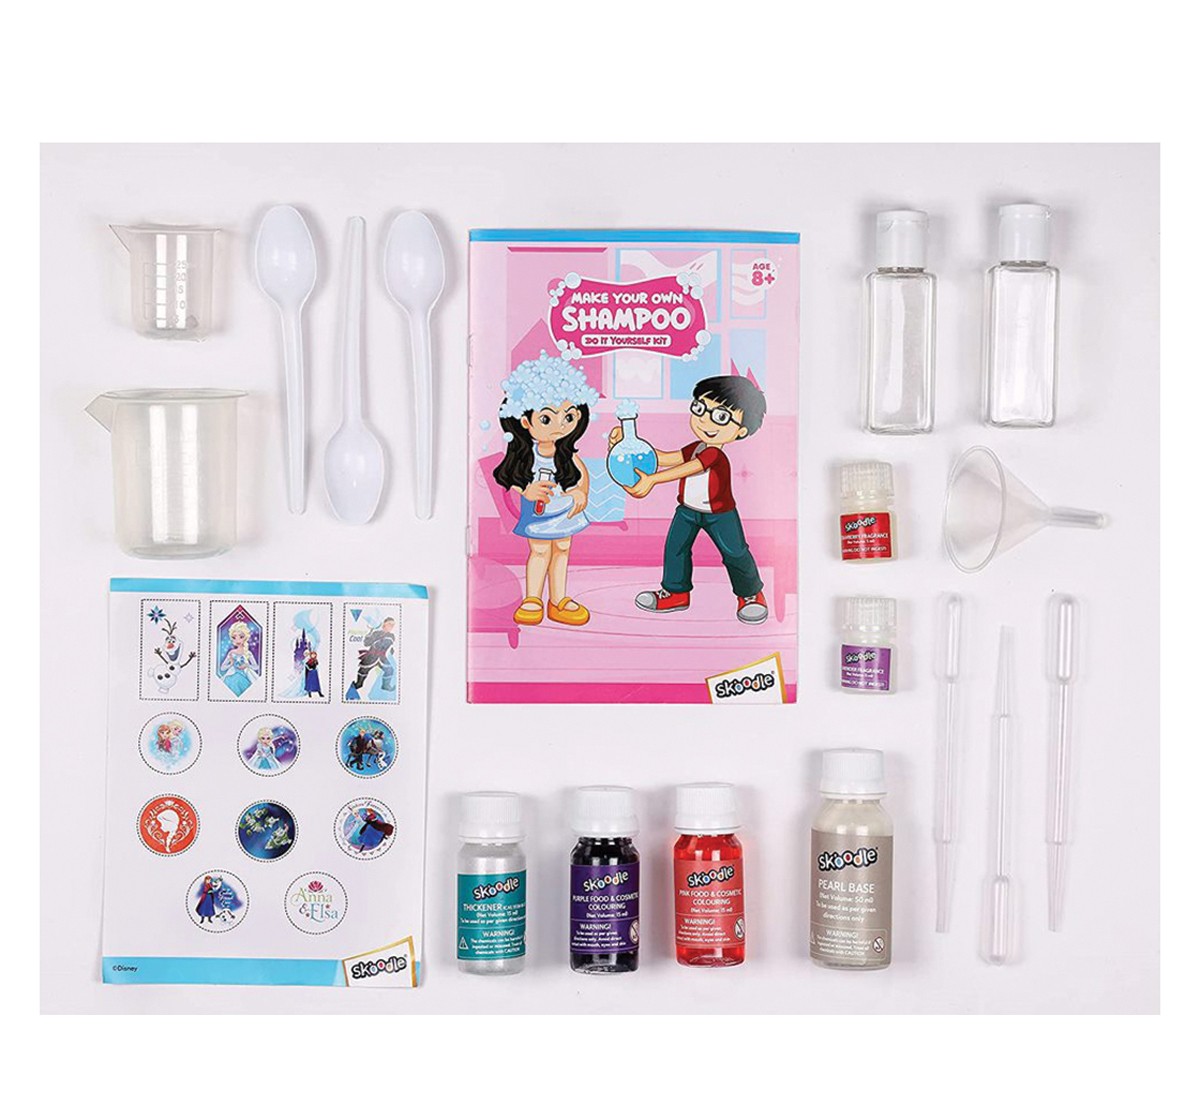 Disney Frozen Make Your Own Shampoo Do It Yourself Kit Plastic Multicolour 8Y+